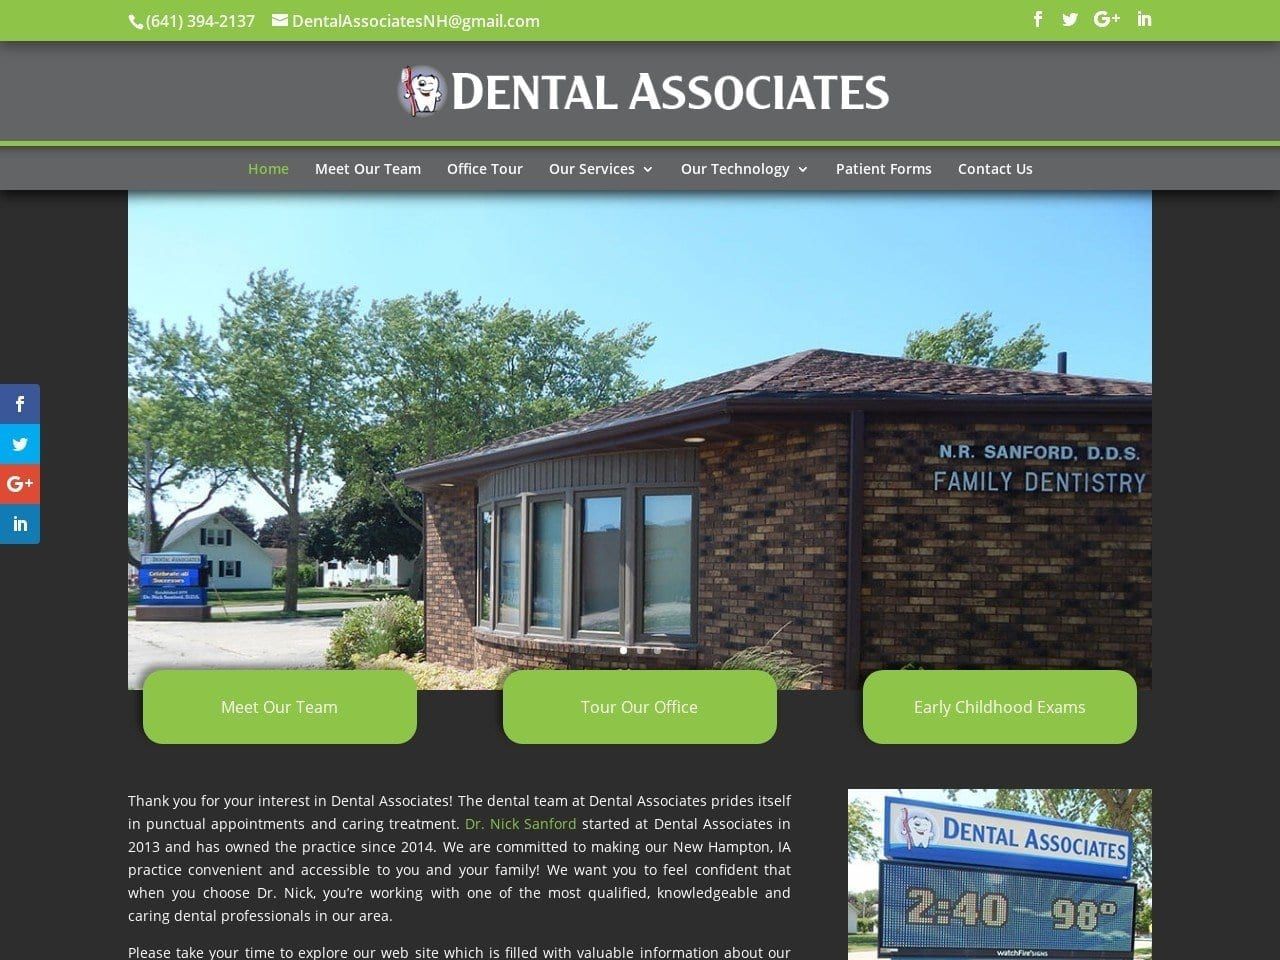 Dental Associates Website Screenshot from newhamptondentist.com